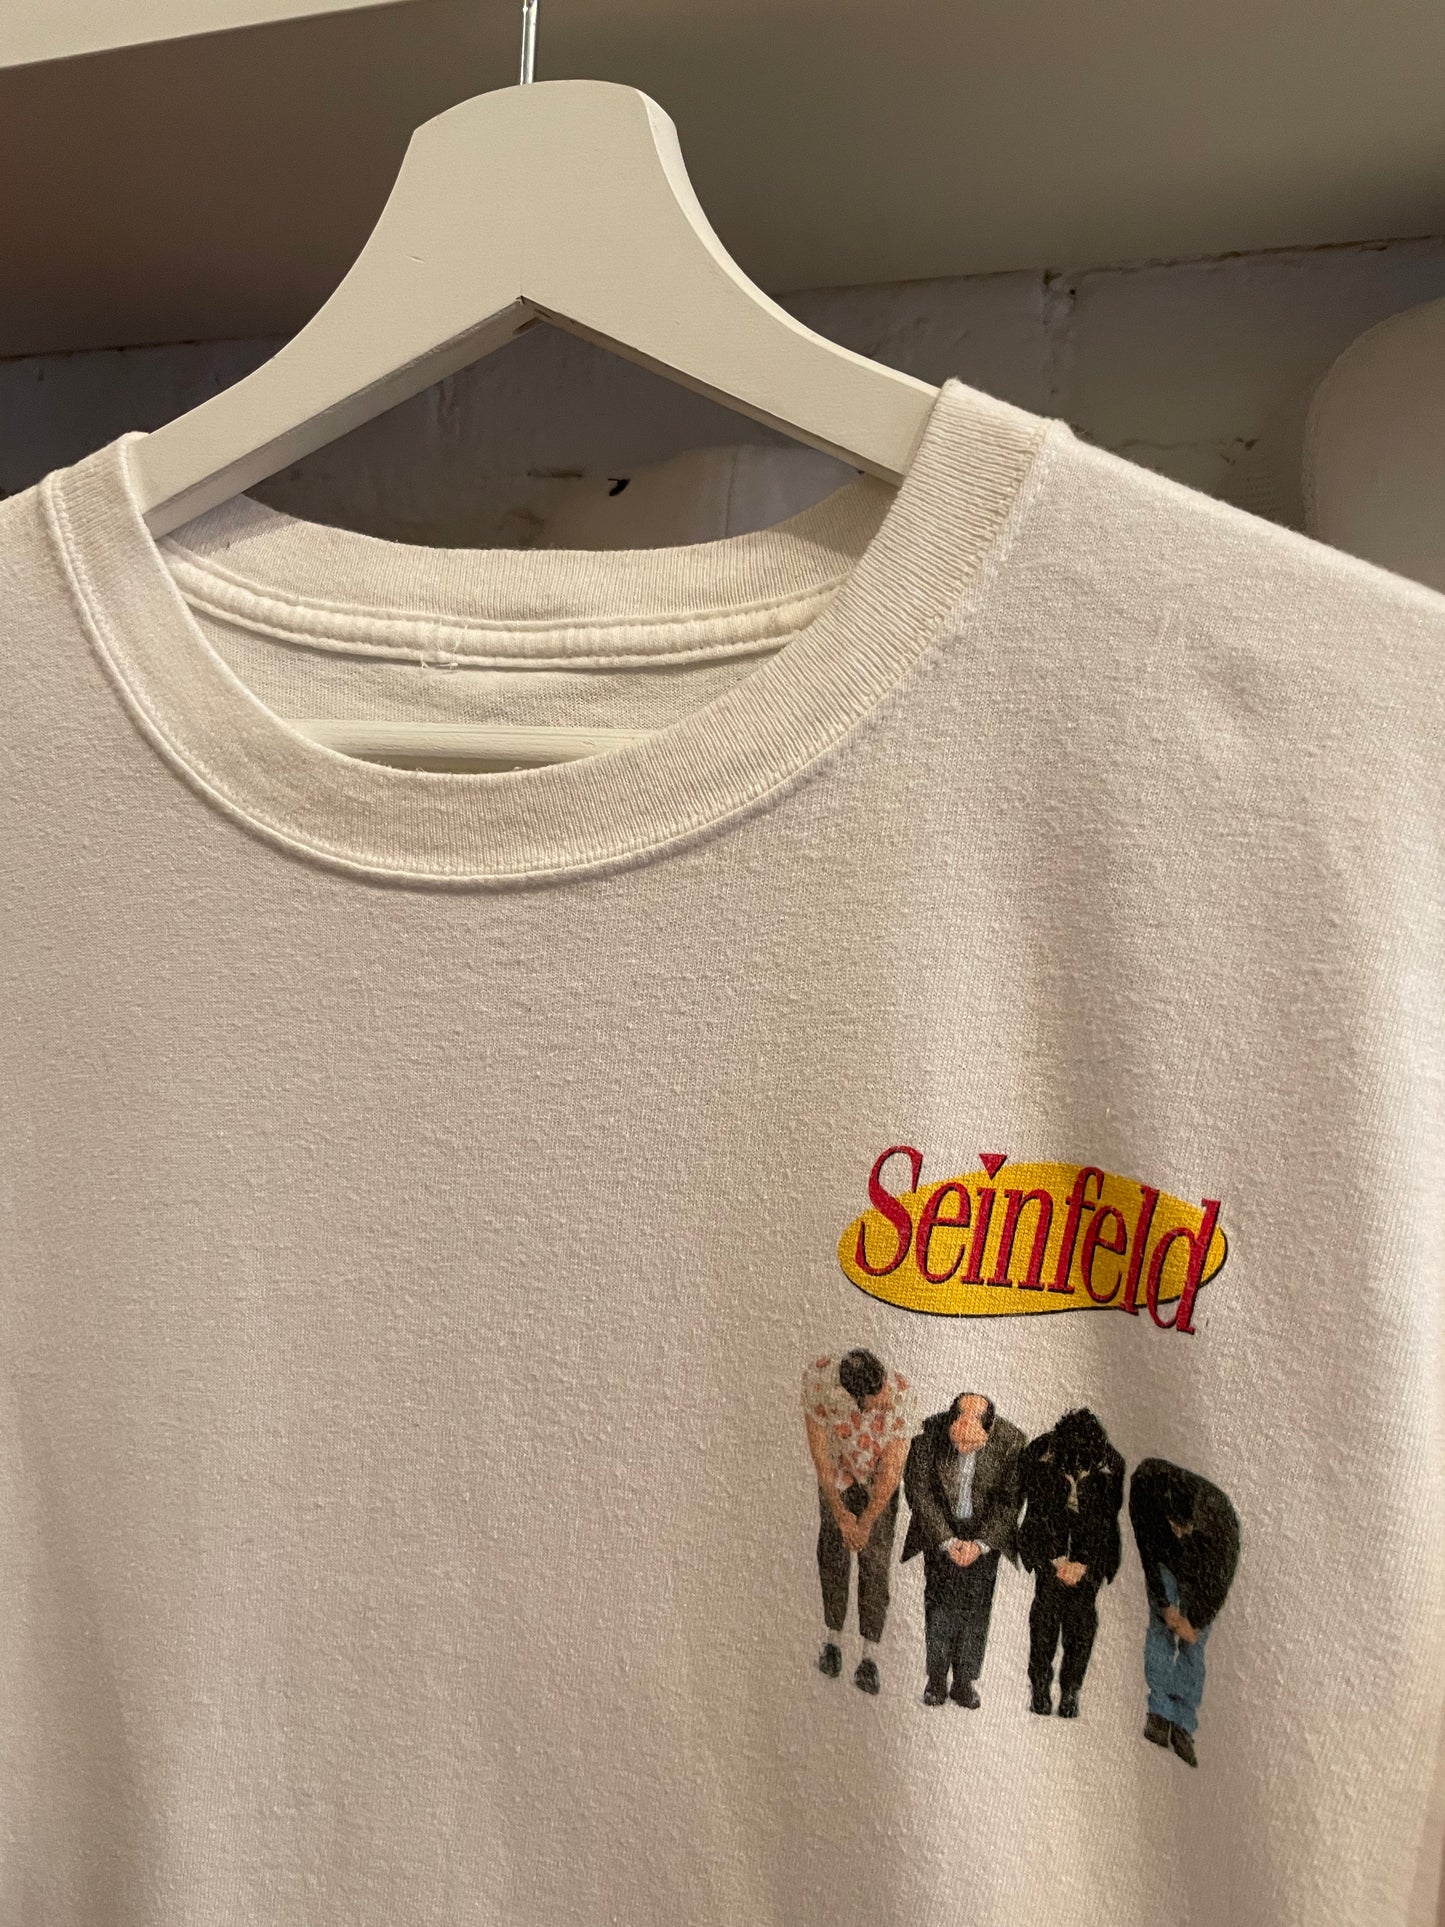 Seinfeld T-Shirt Size L